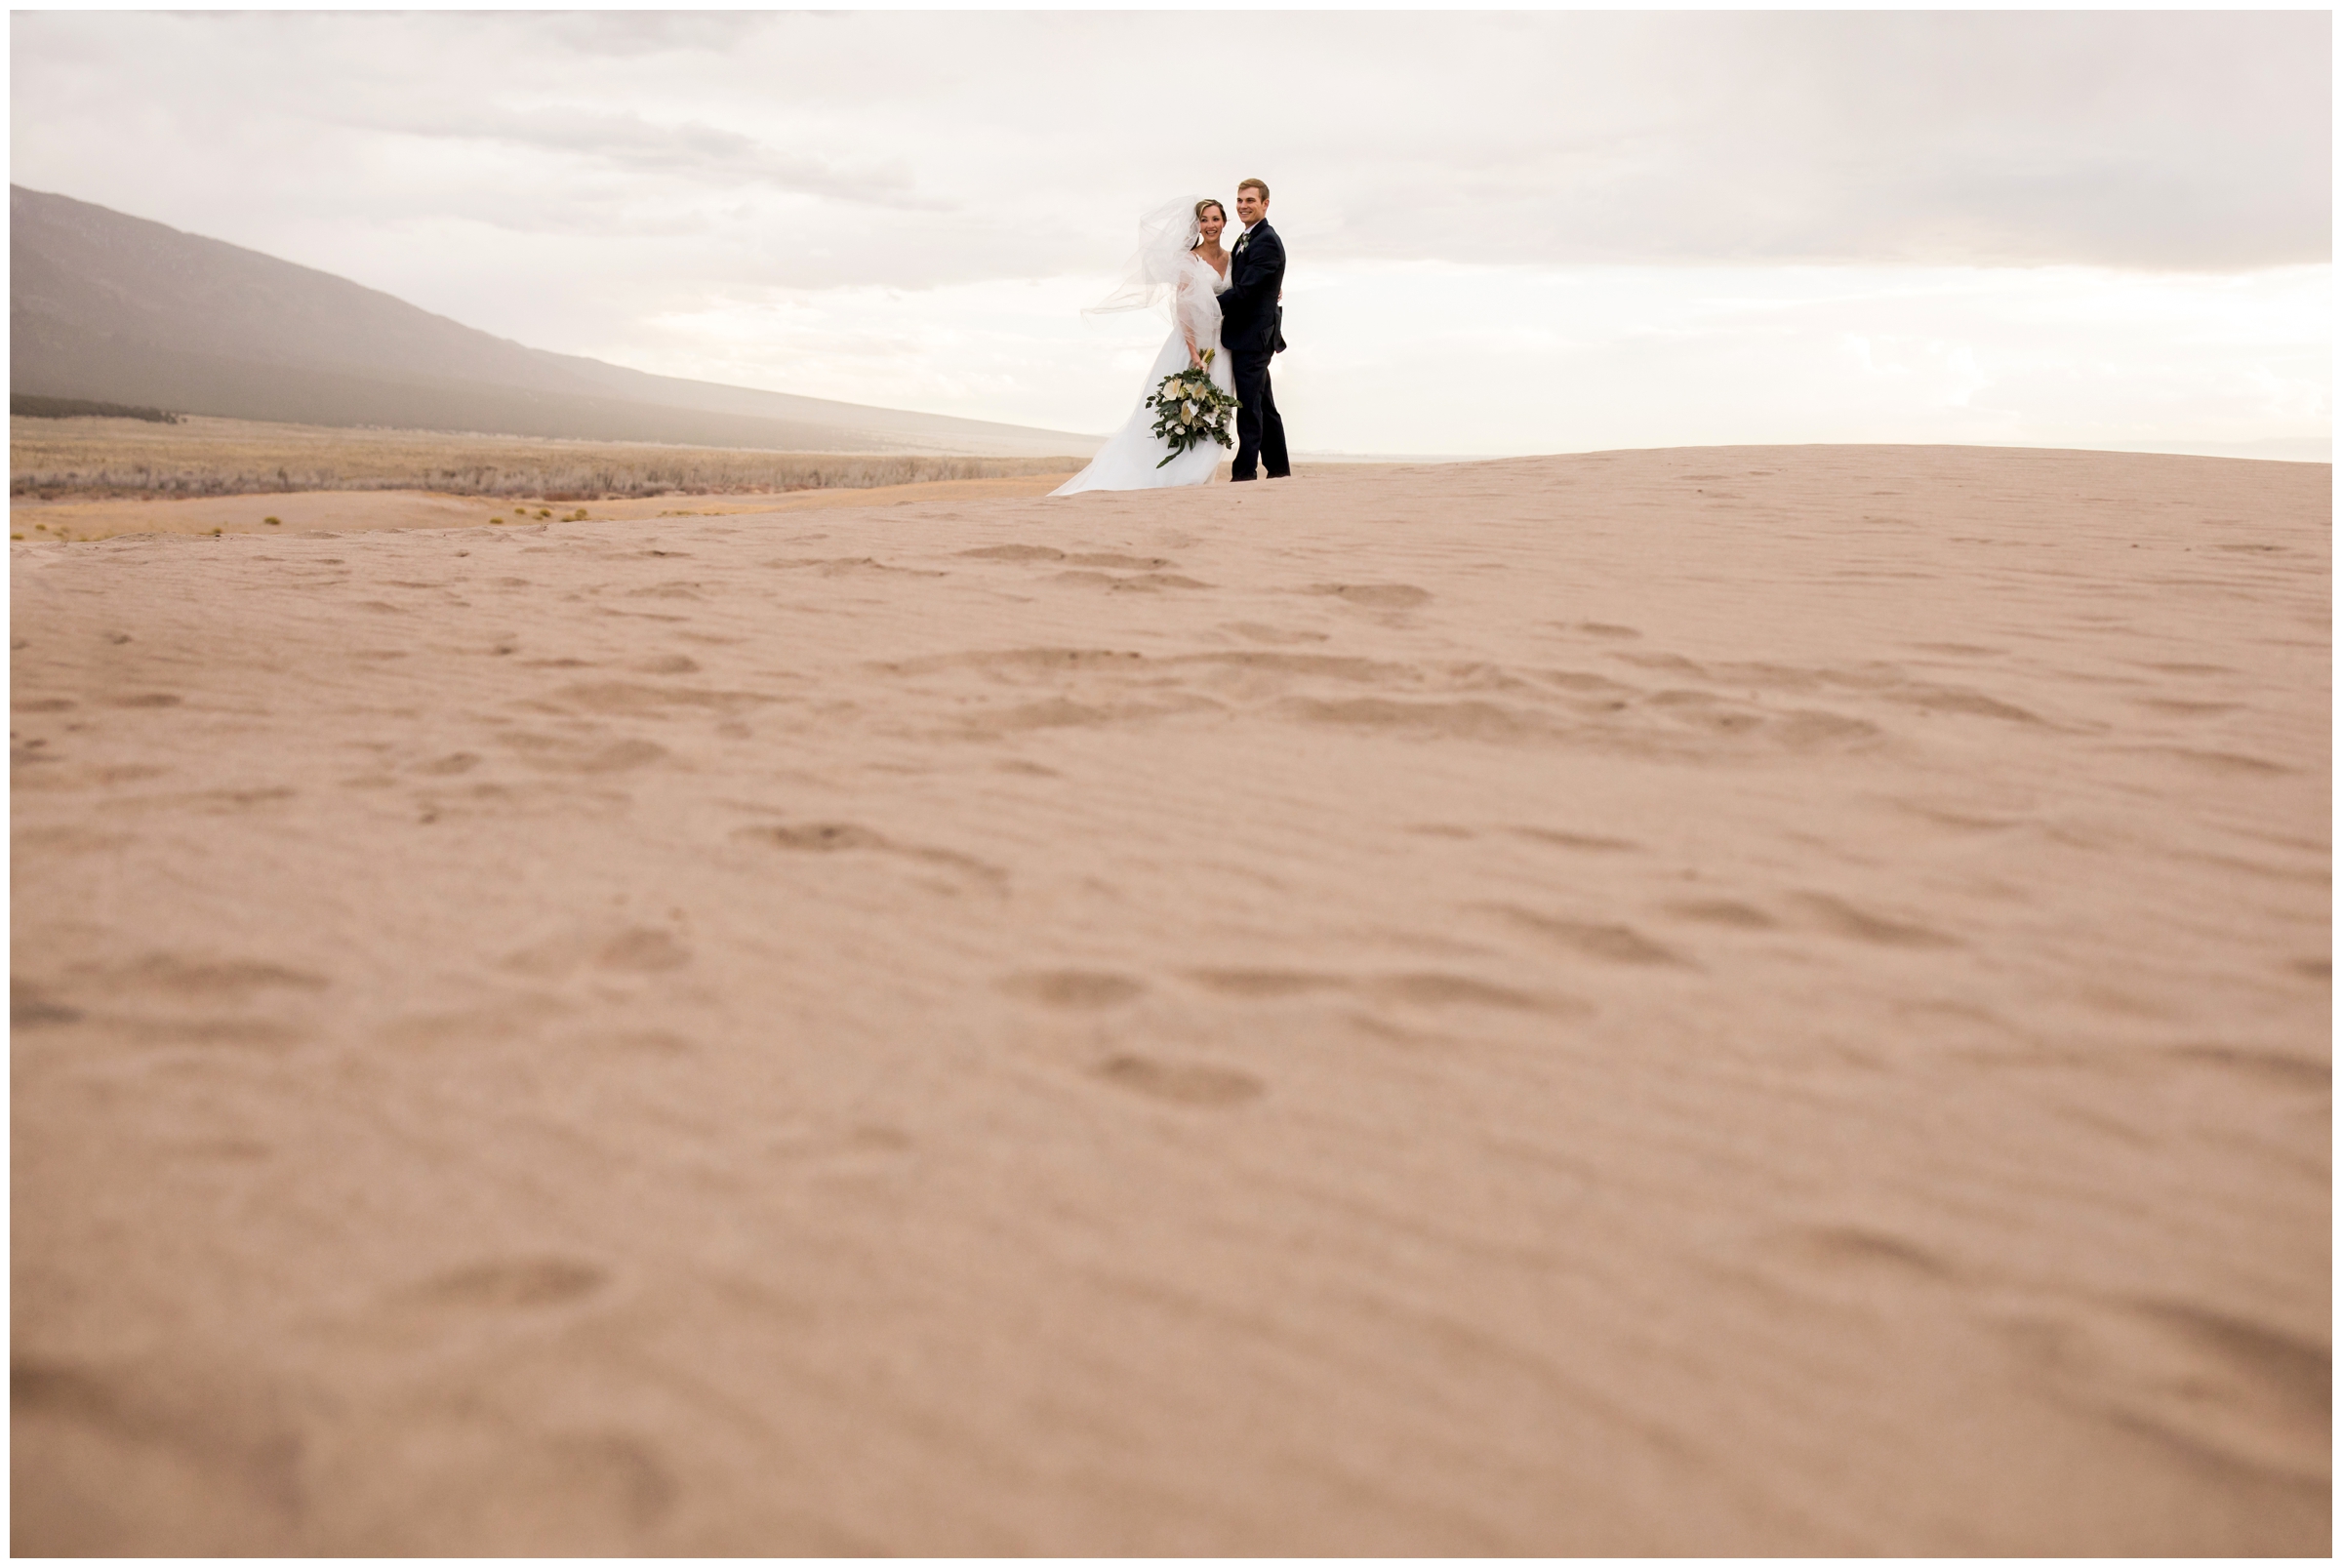 adventure elopement photography inspiration by Colorado wedding photographer Plum Pretty Photo 